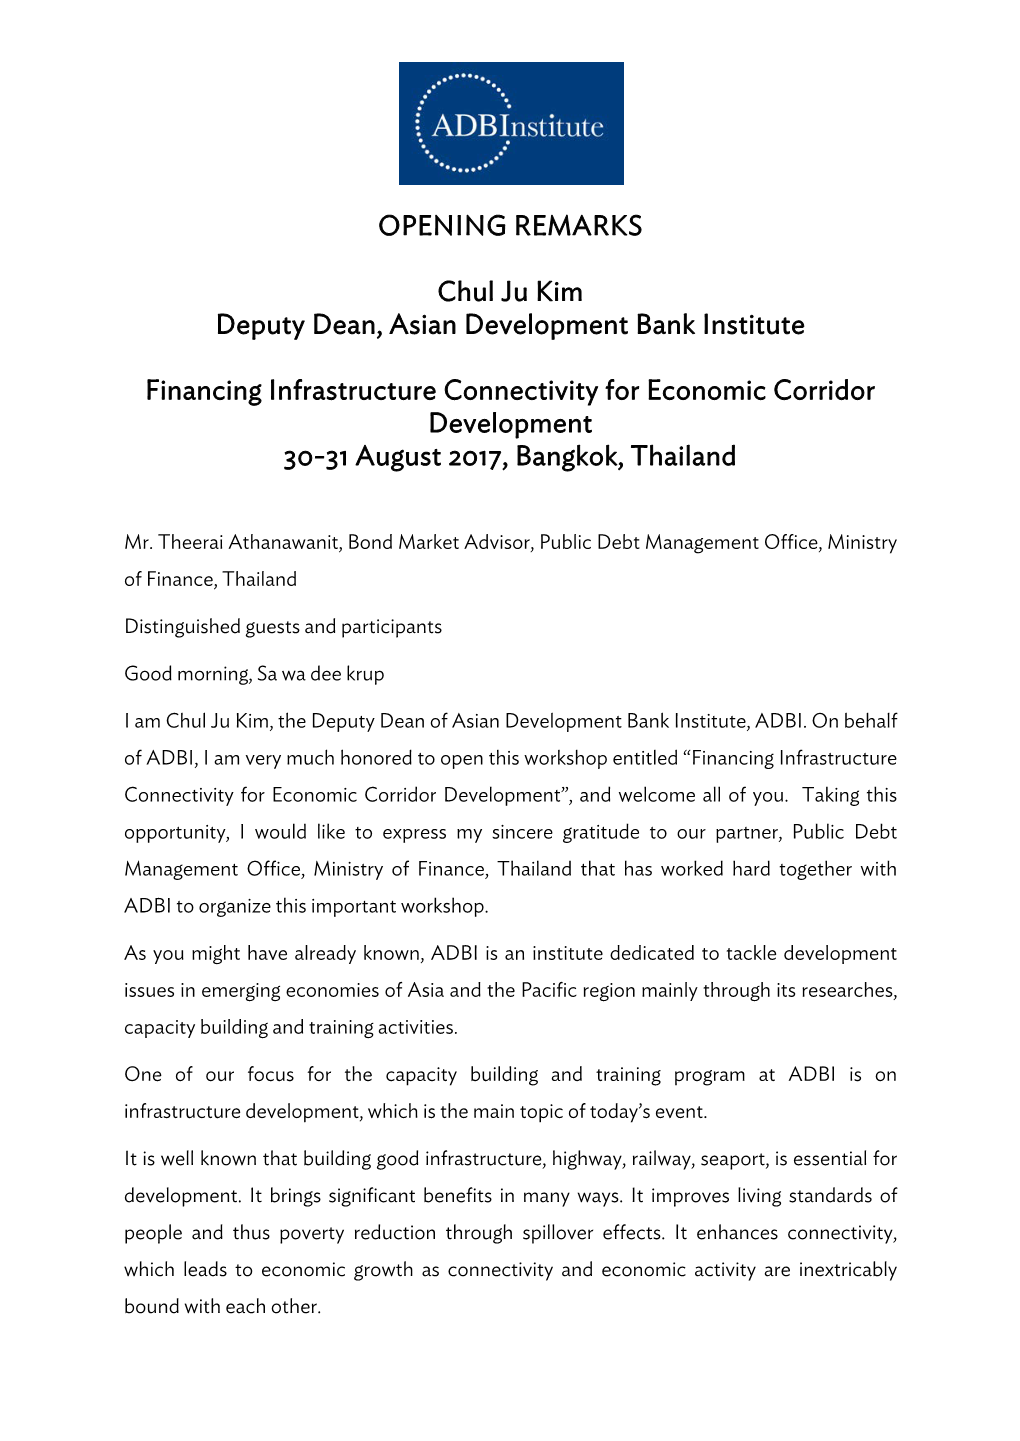 Financing Infrastructure Connectivity for Economic Corridor Development 30-31 August 2017, Bangkok, Thailand